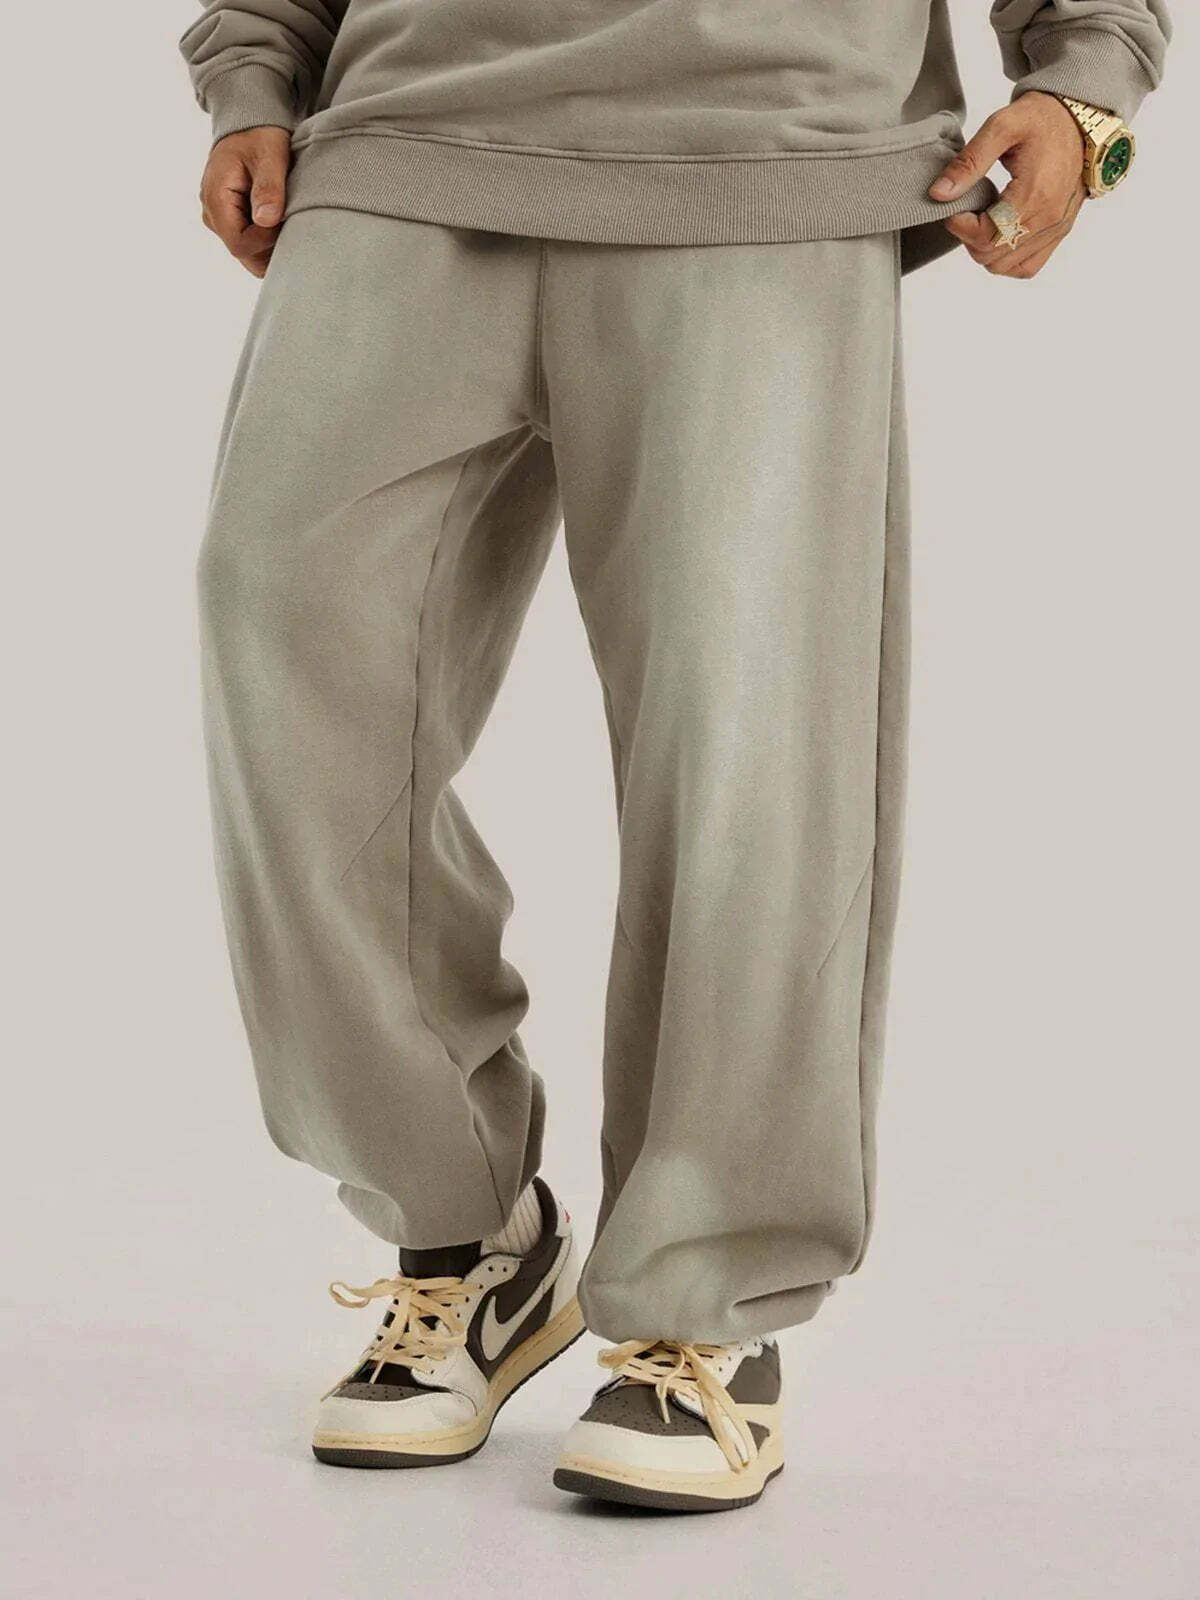 retro smudged feet pants edgy & stylish streetwear 5829